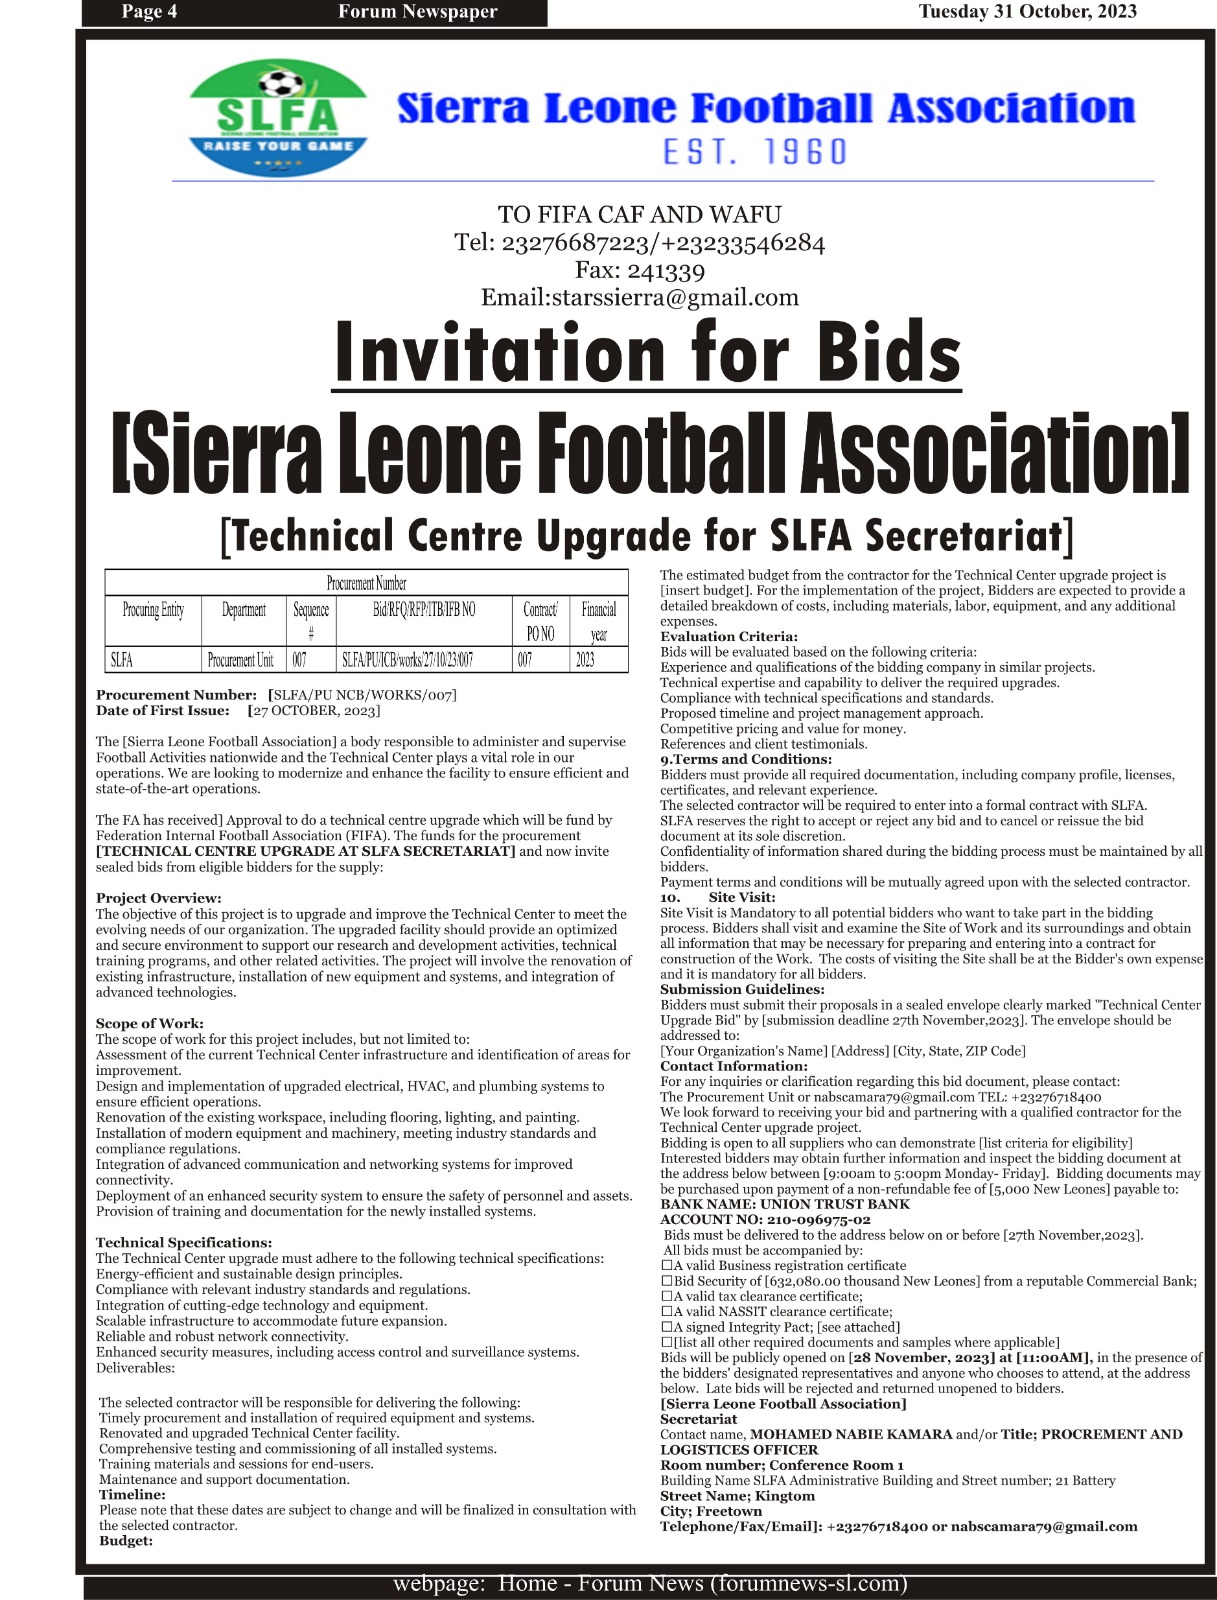 Invitation for Bids   [Sierra Leone Football Association]  [Technical Centre Upgrade for SLFA Secretariat]   Procurement Number [SLFA/PU NCB/WORKS/007]  Date of First Issue [27 OCTOBER, 2023]